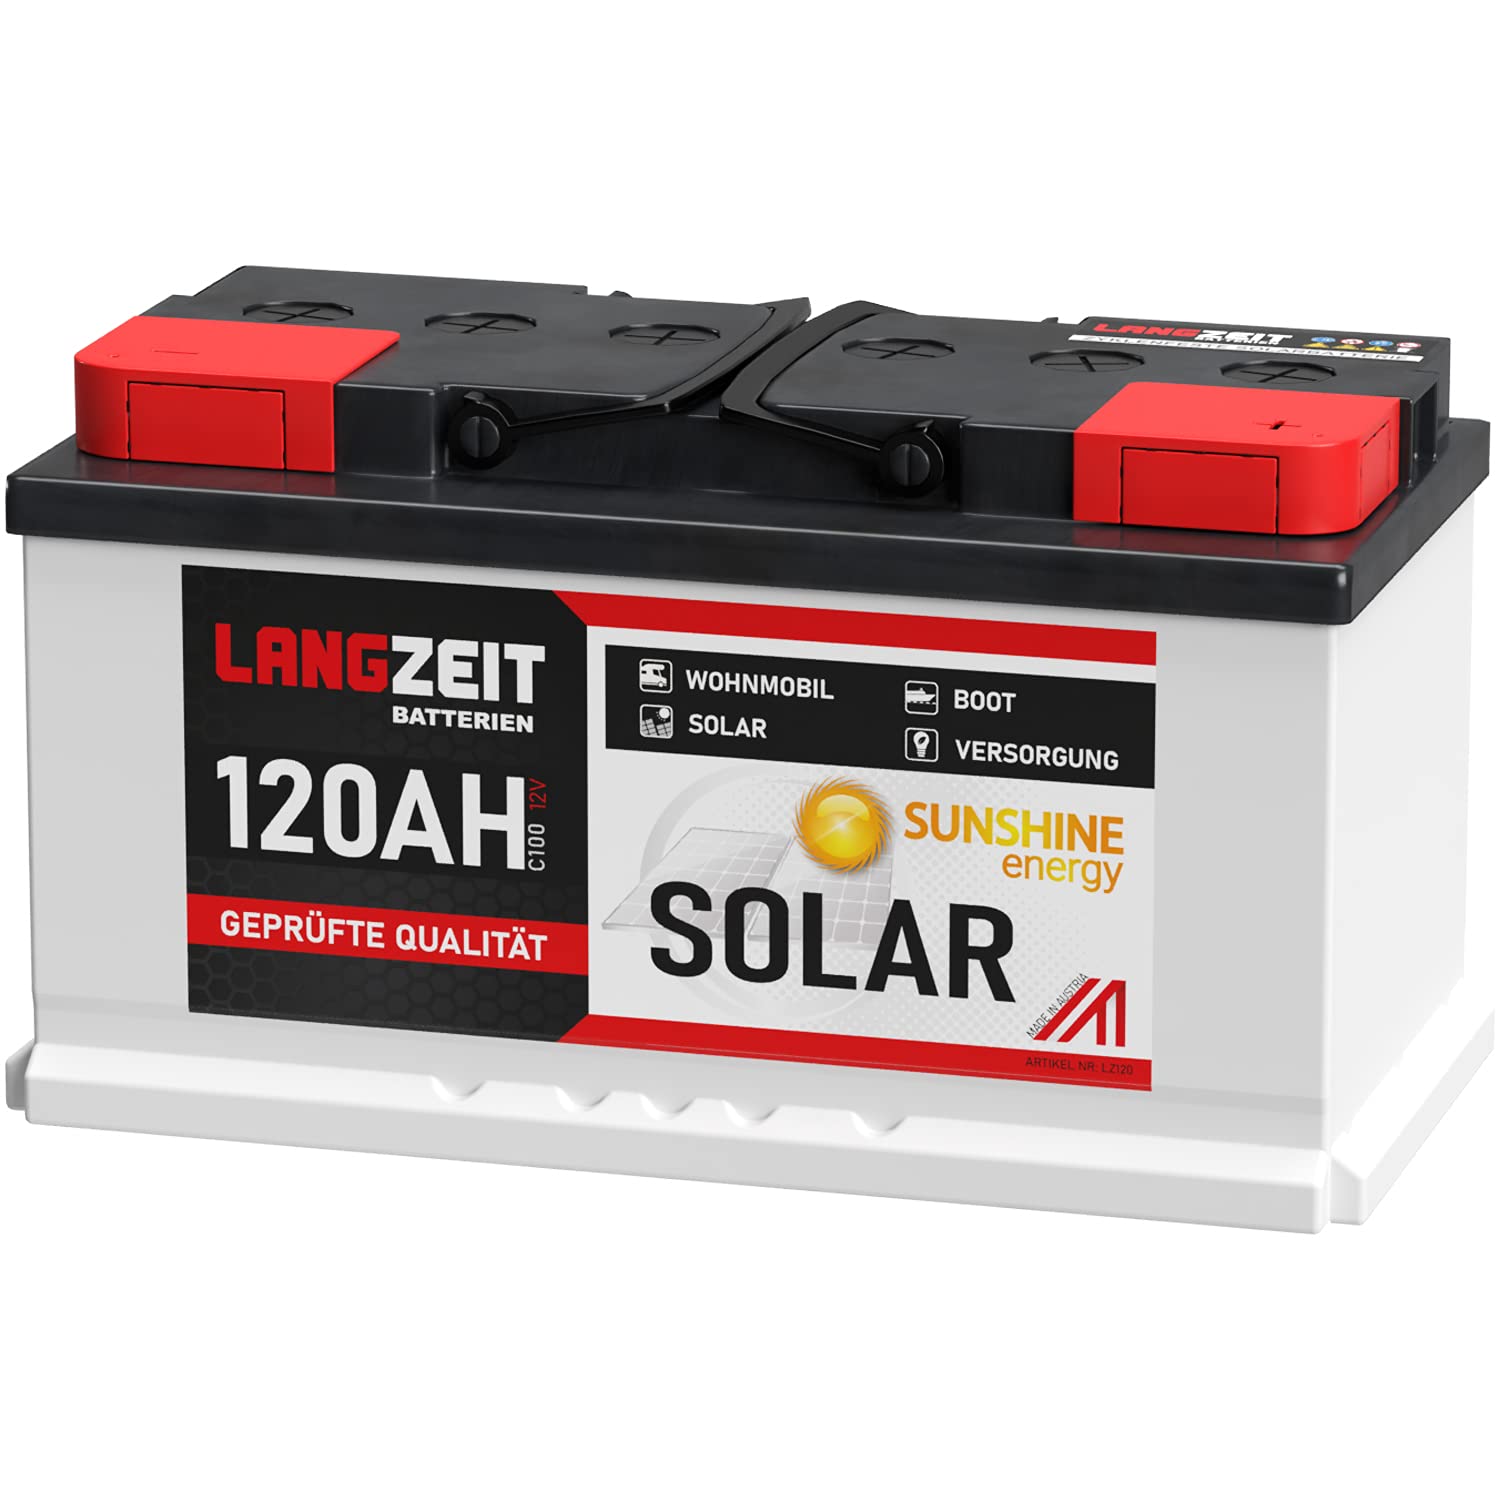 LANGZEIT 120Ah 12V Solarbatterie Boot Marine Wohnmobil Solar Batterie 100Ah von LANGZEIT Batterien